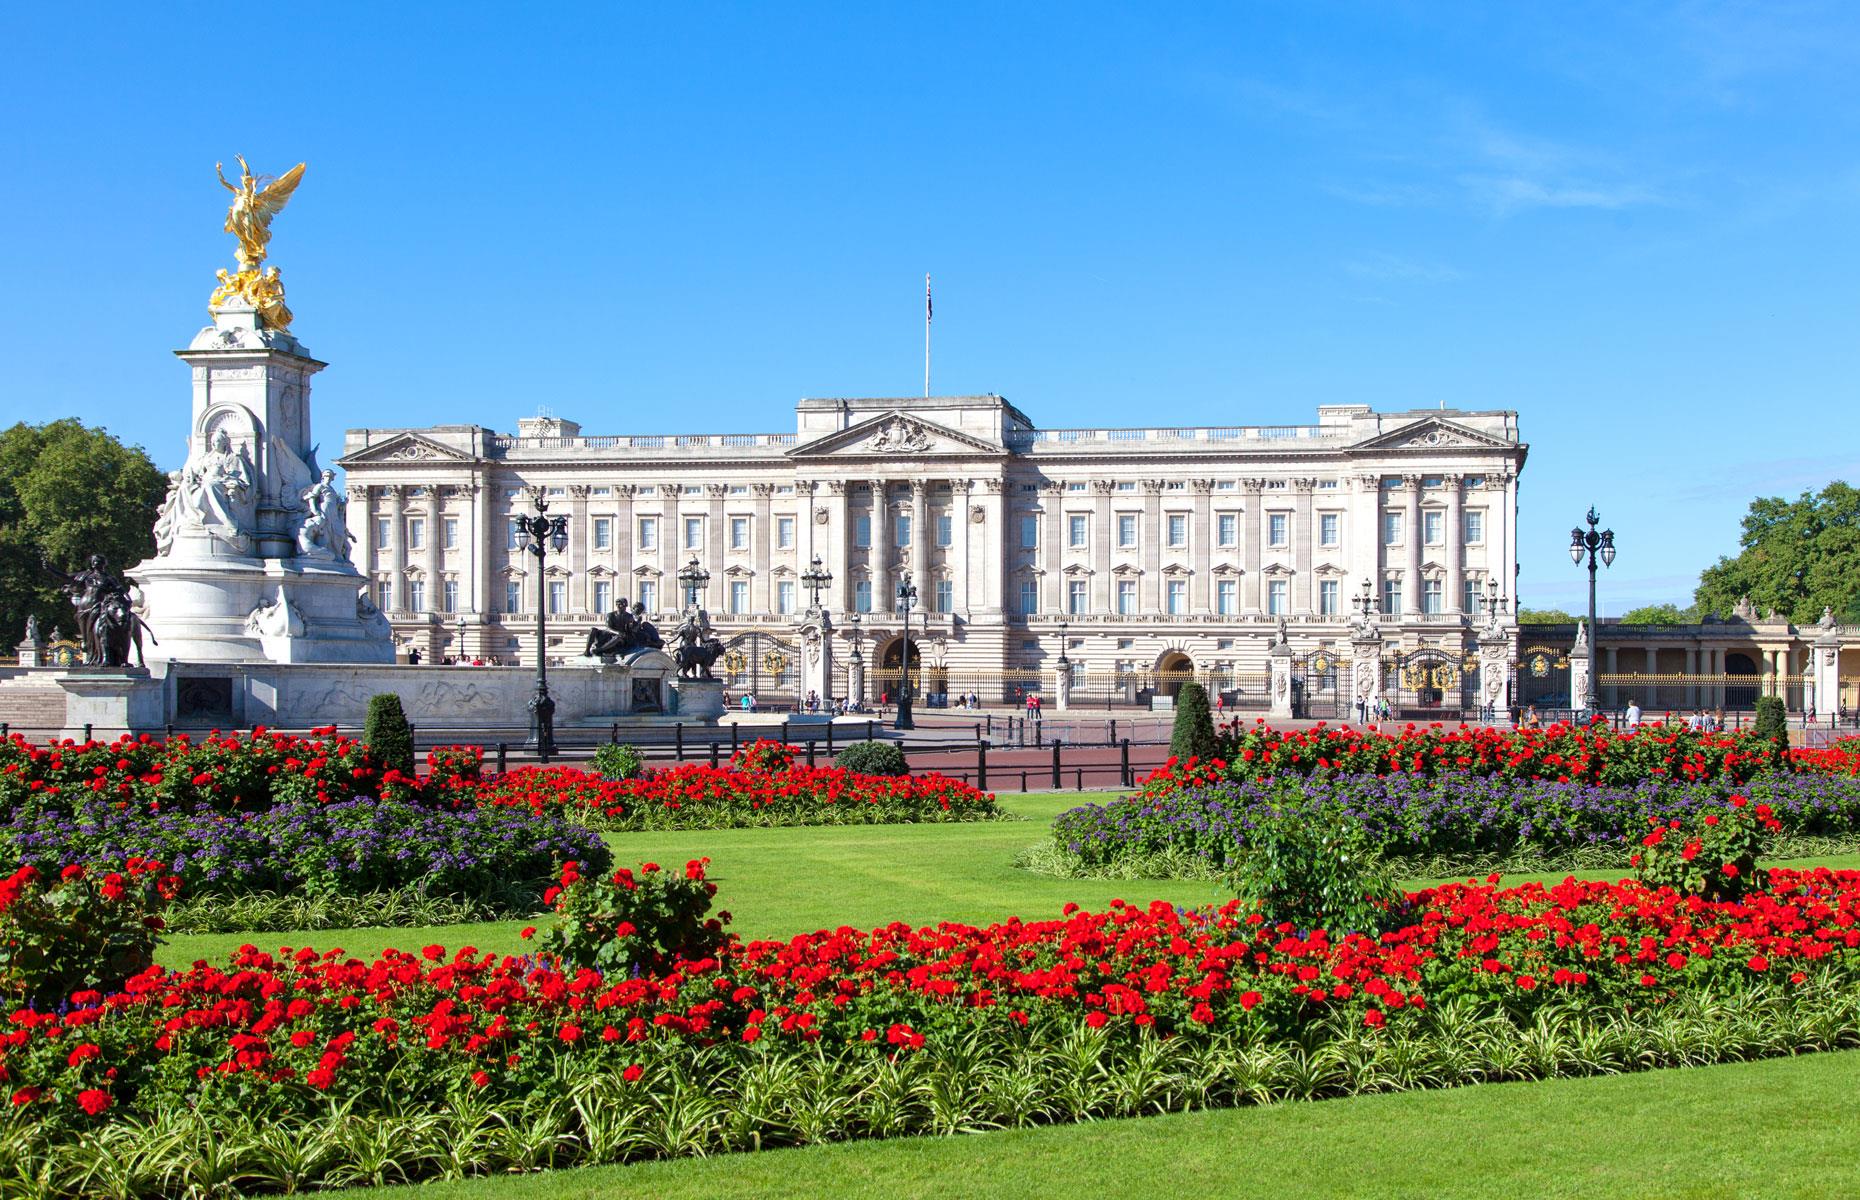 Buckingham Palace, UK – $7.2 billion (£5.5bn)